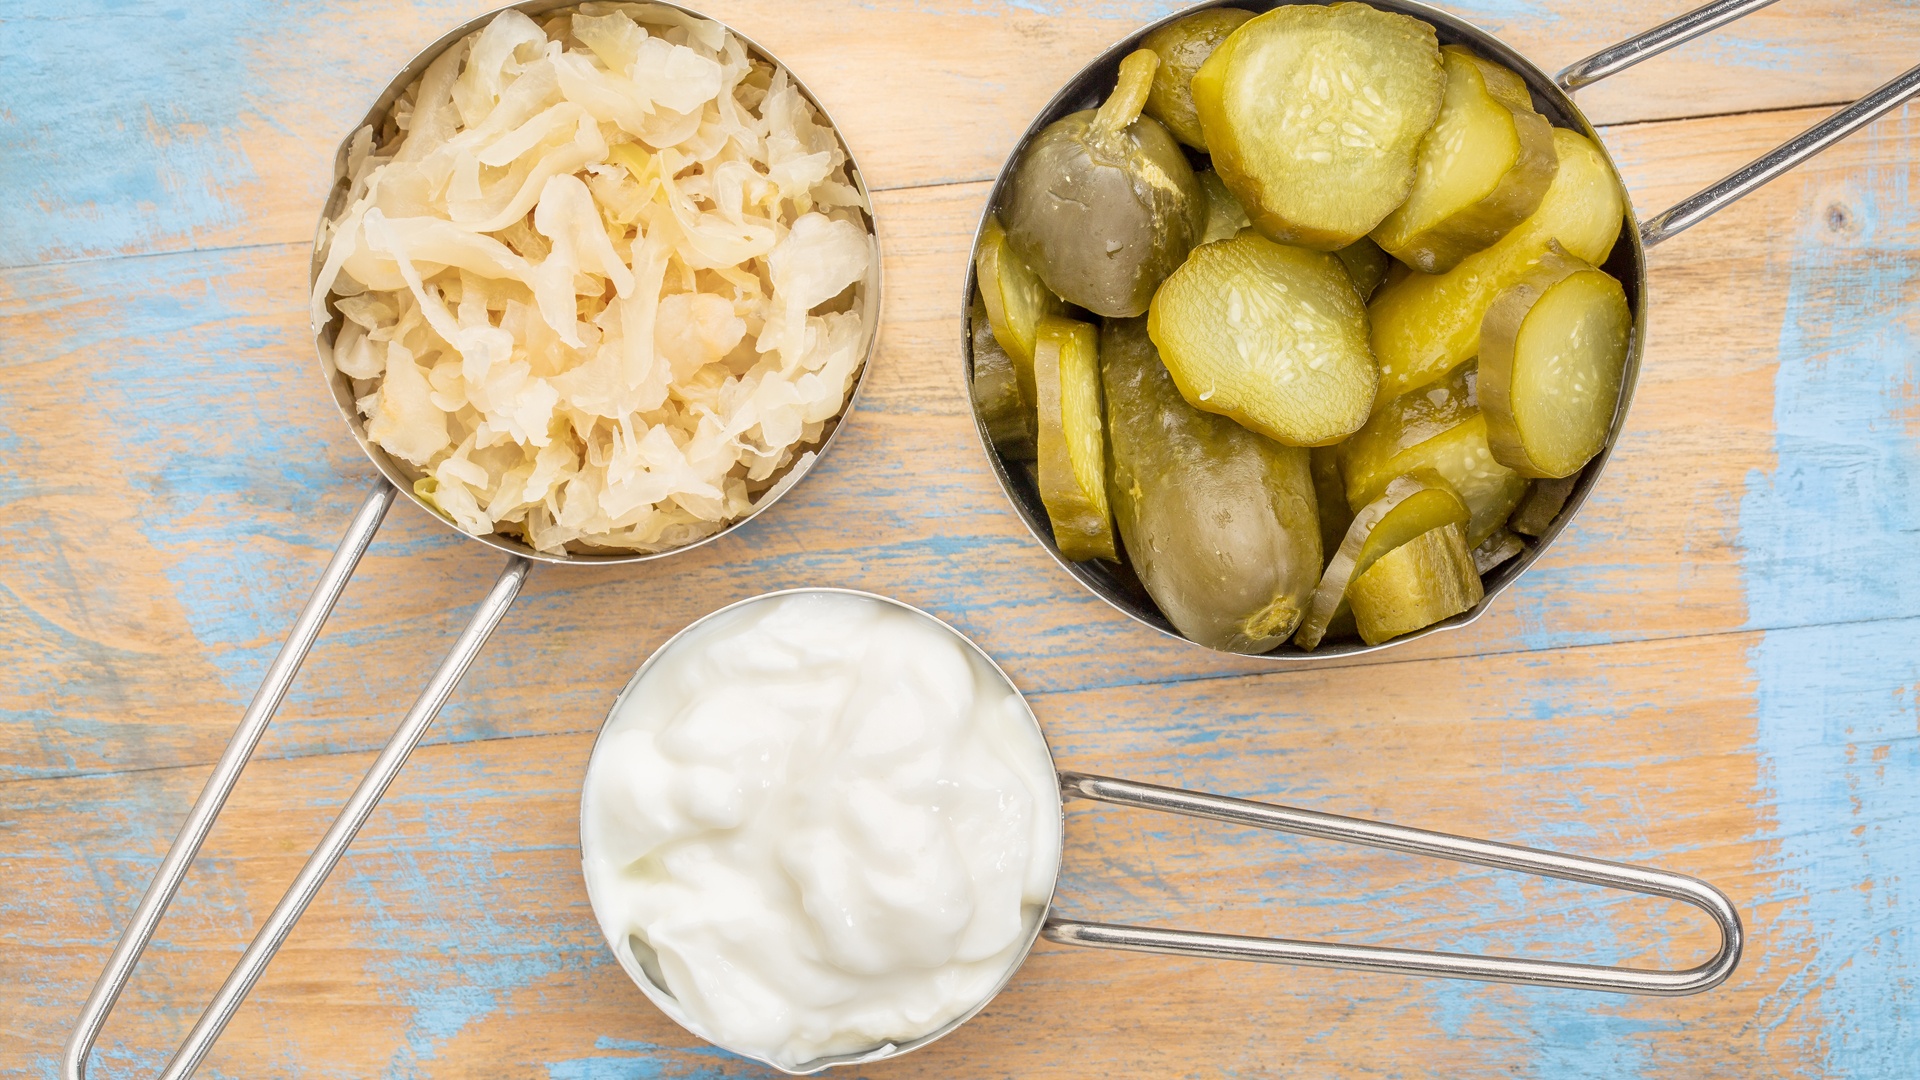 Three cups of fermented foods: sauerkraut, pickles and yogurt.